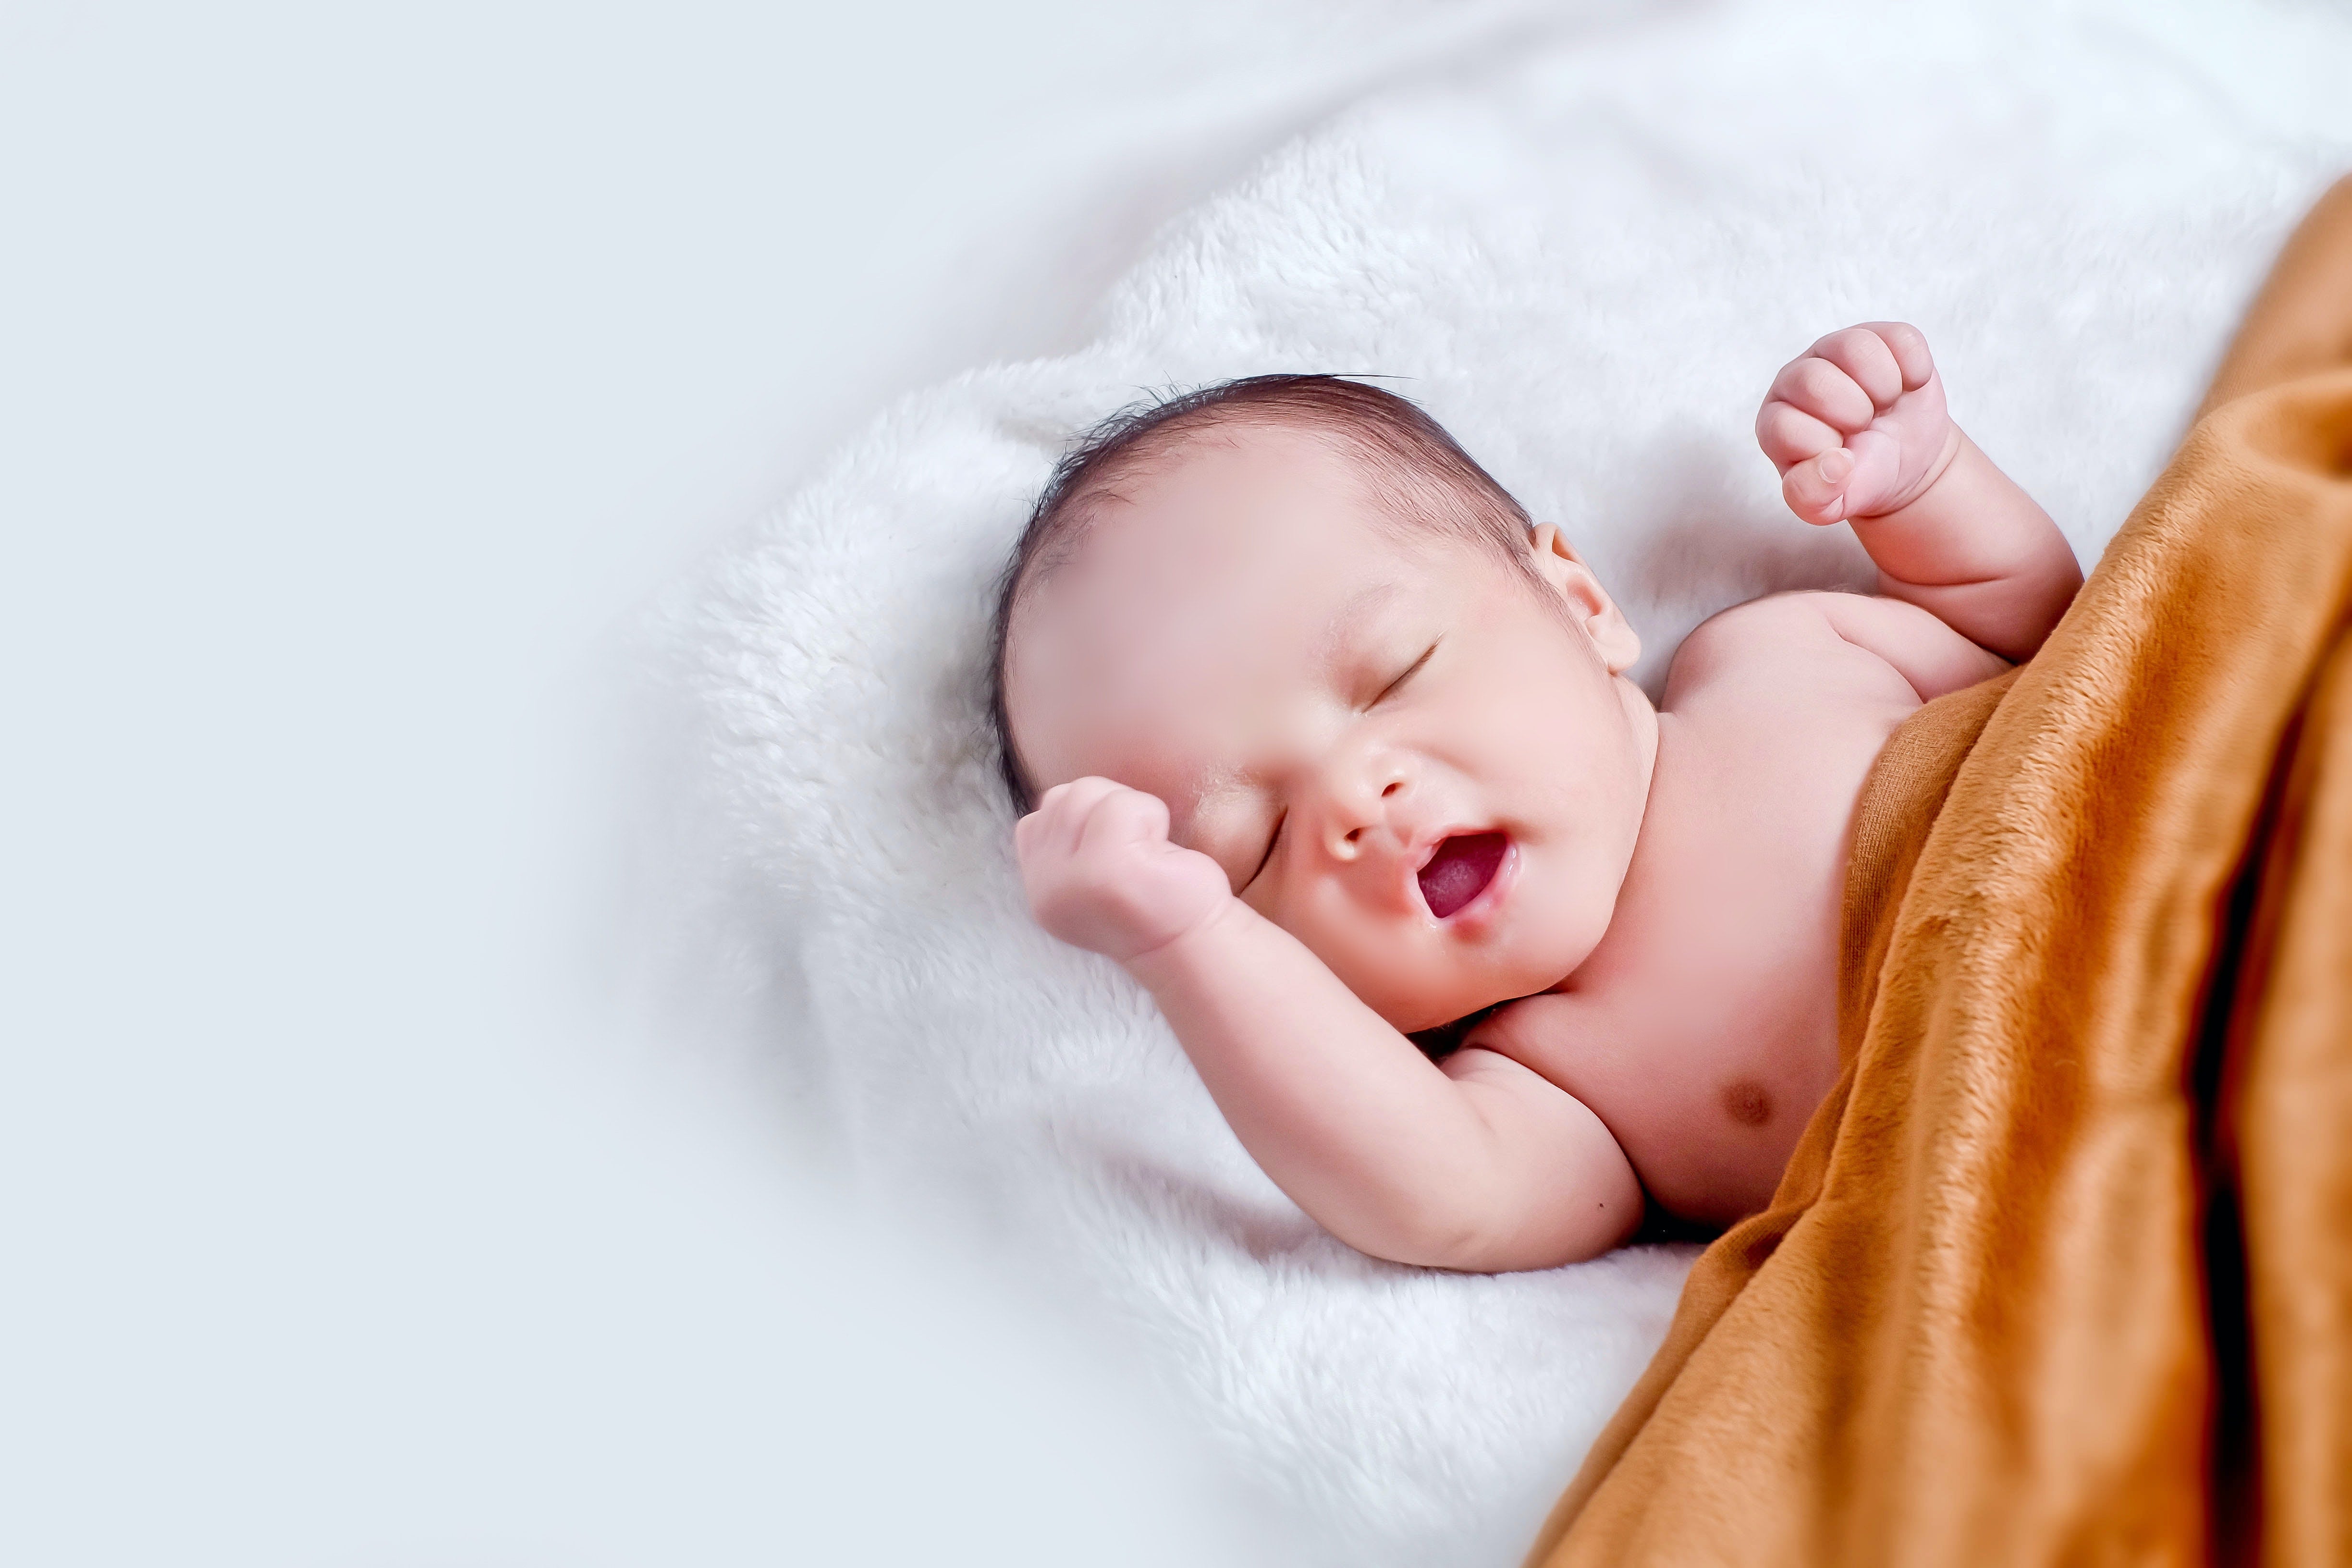 Bonding and attachment: newborns